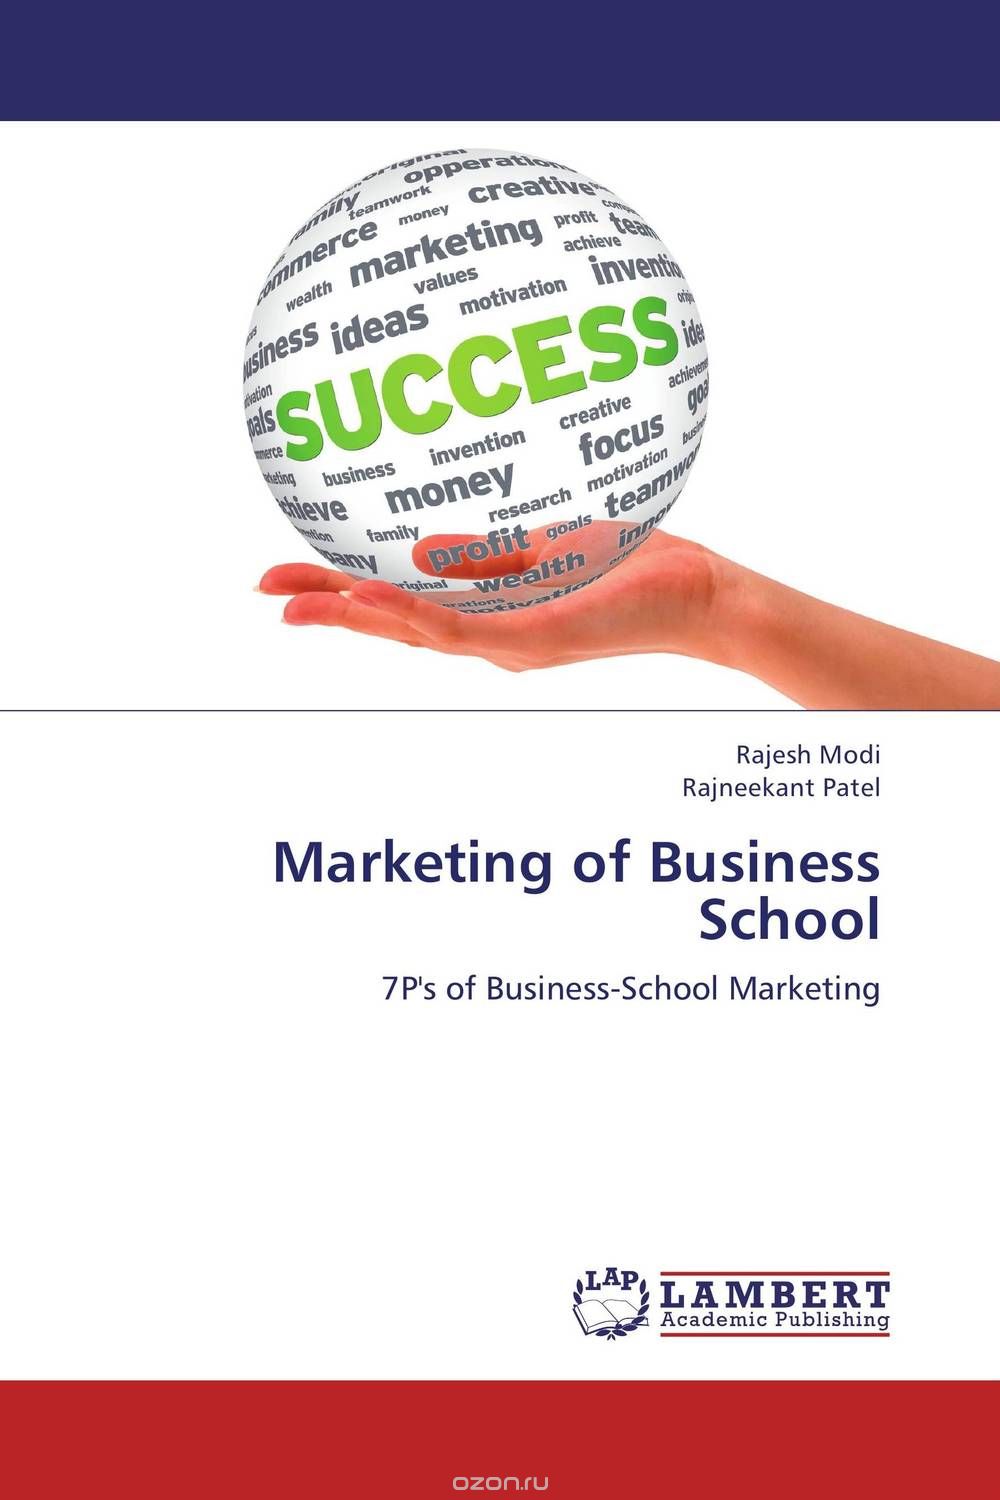 Скачать книгу "Marketing of Business School"